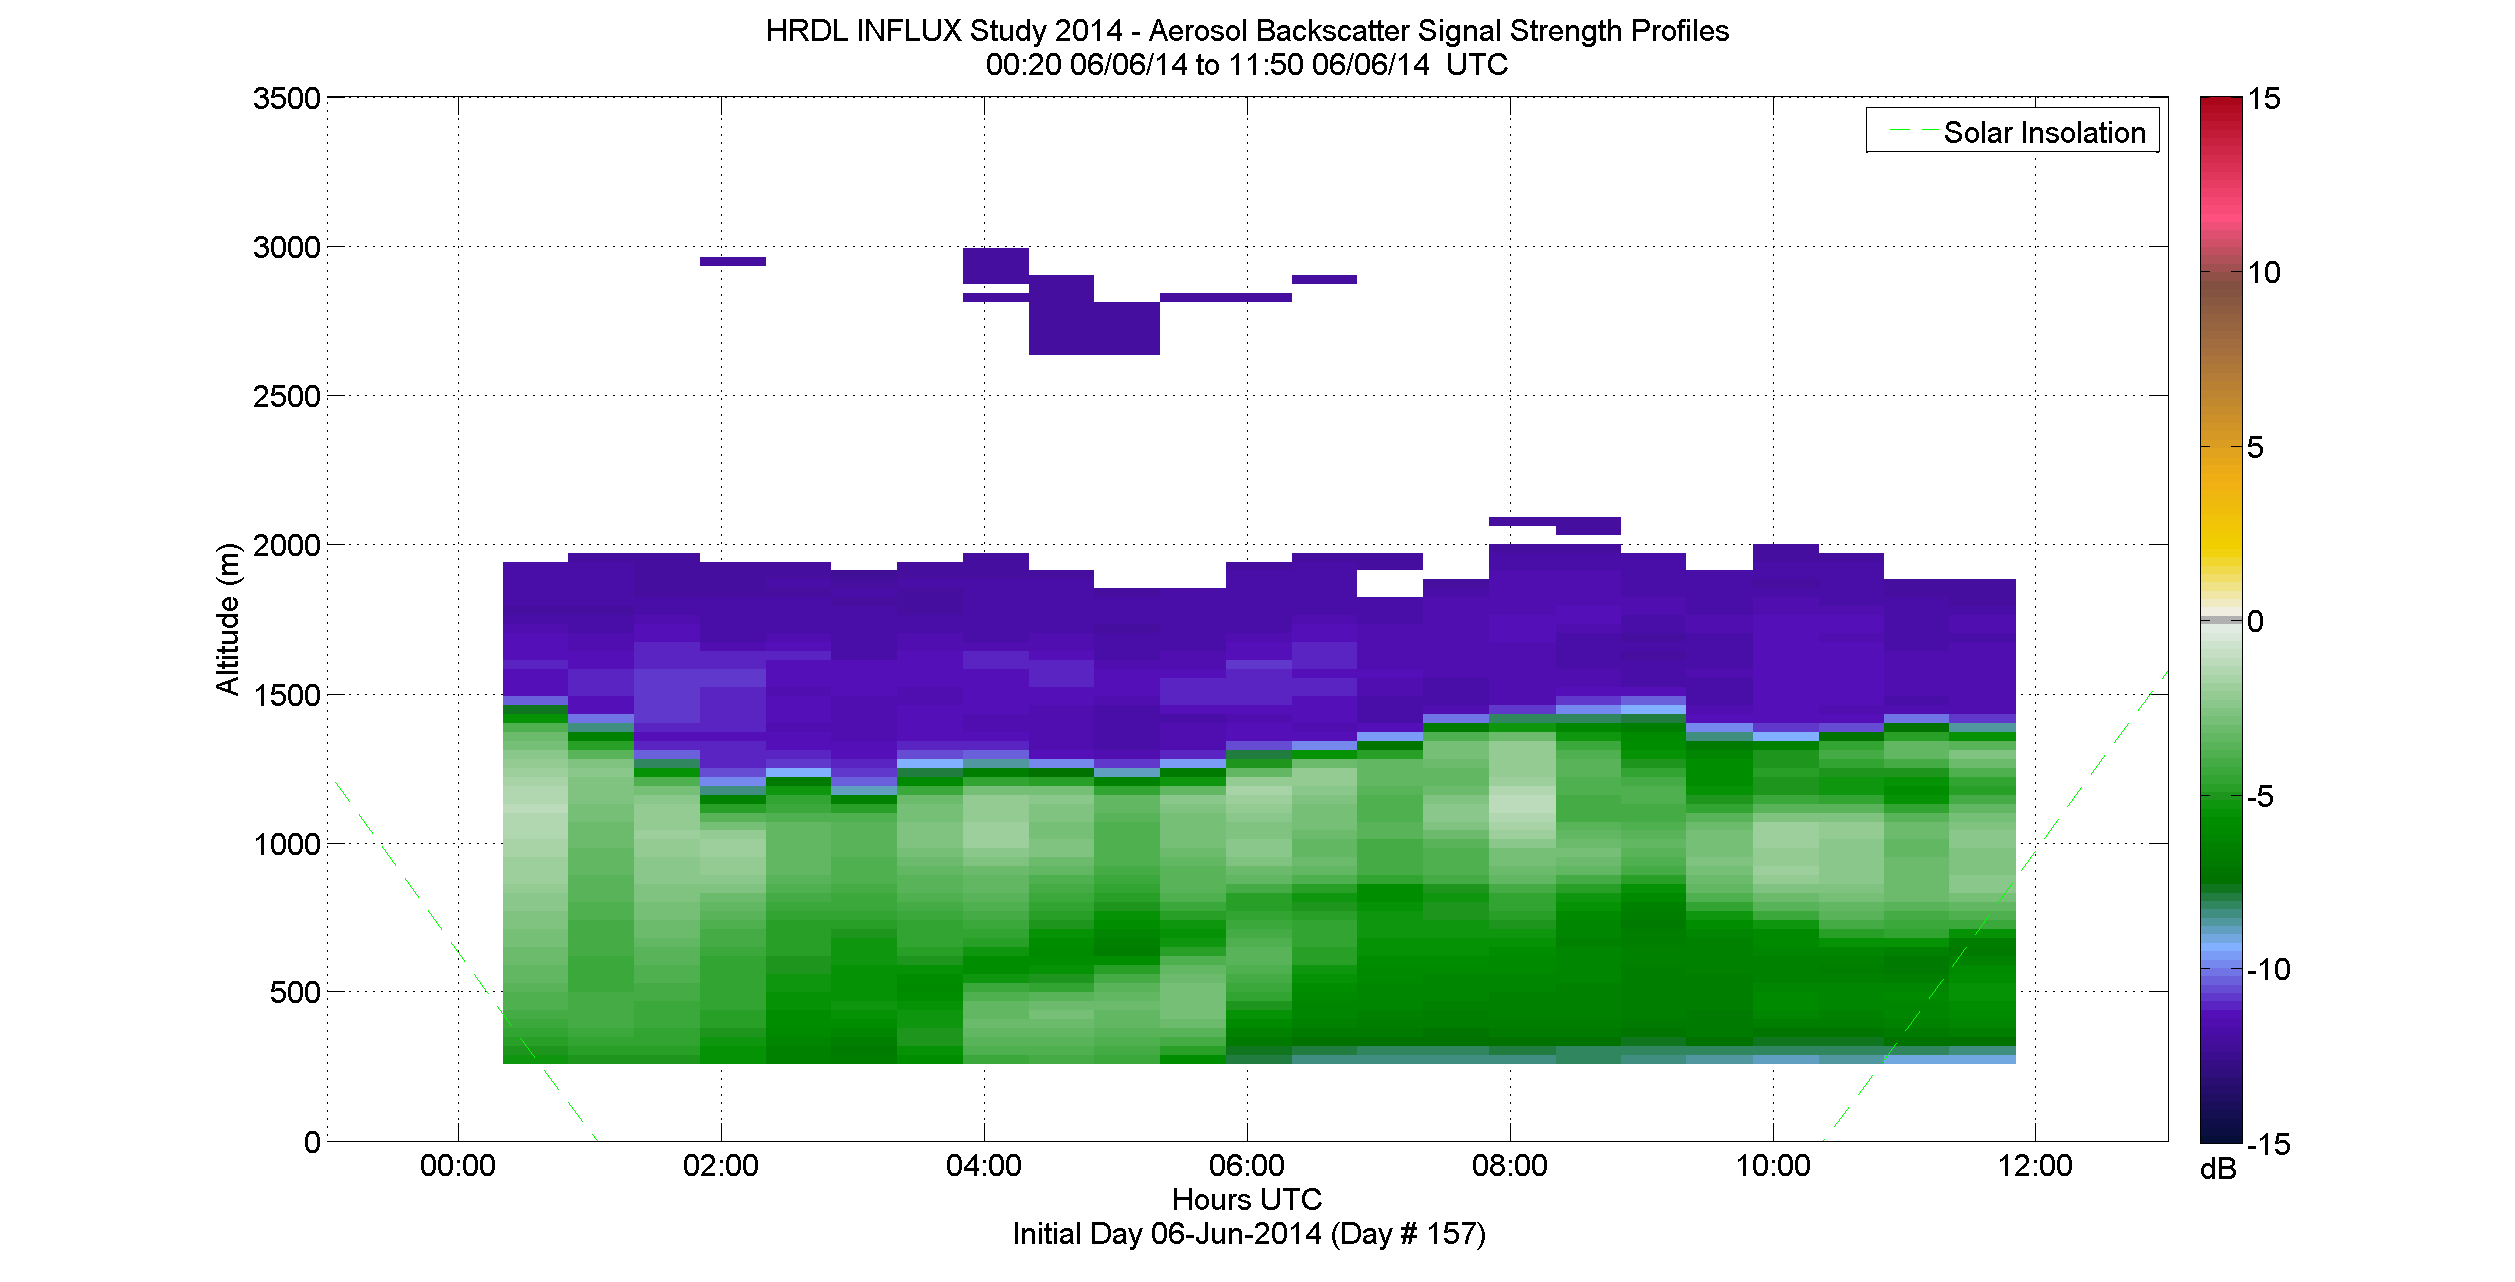 HRDL aerosol backscatter signal strength profile - June 6 am